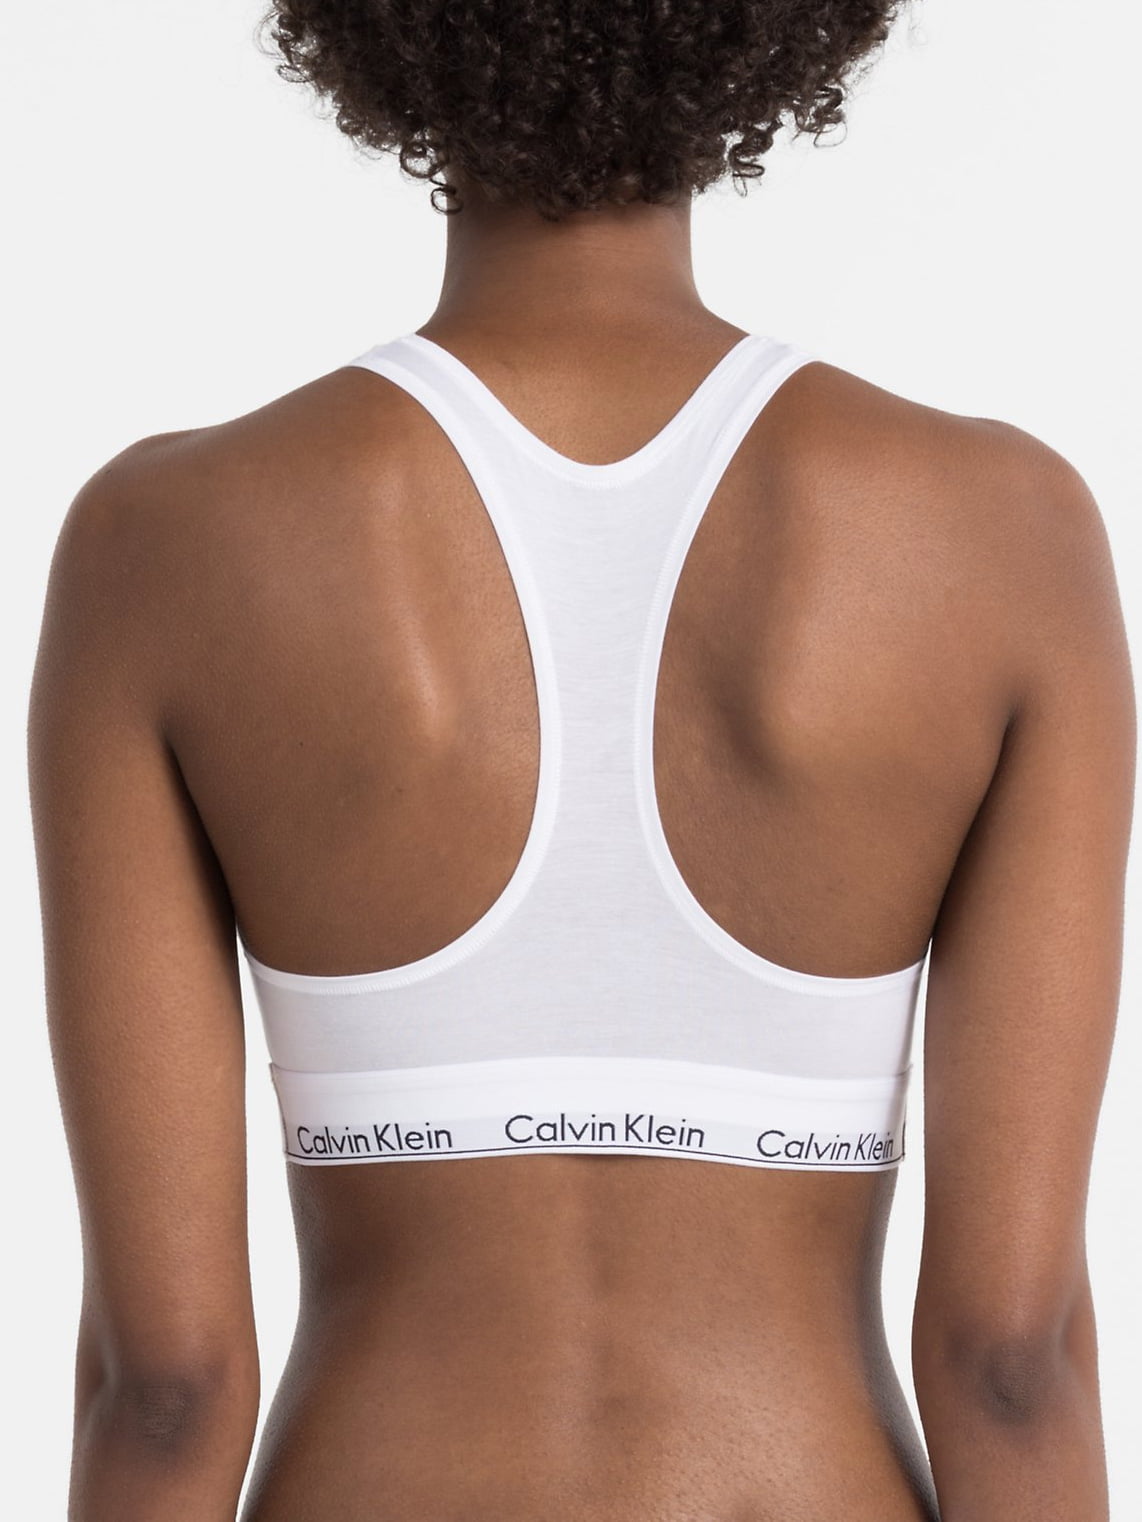 Calvin Klein Modern Cotton lingerie set in white